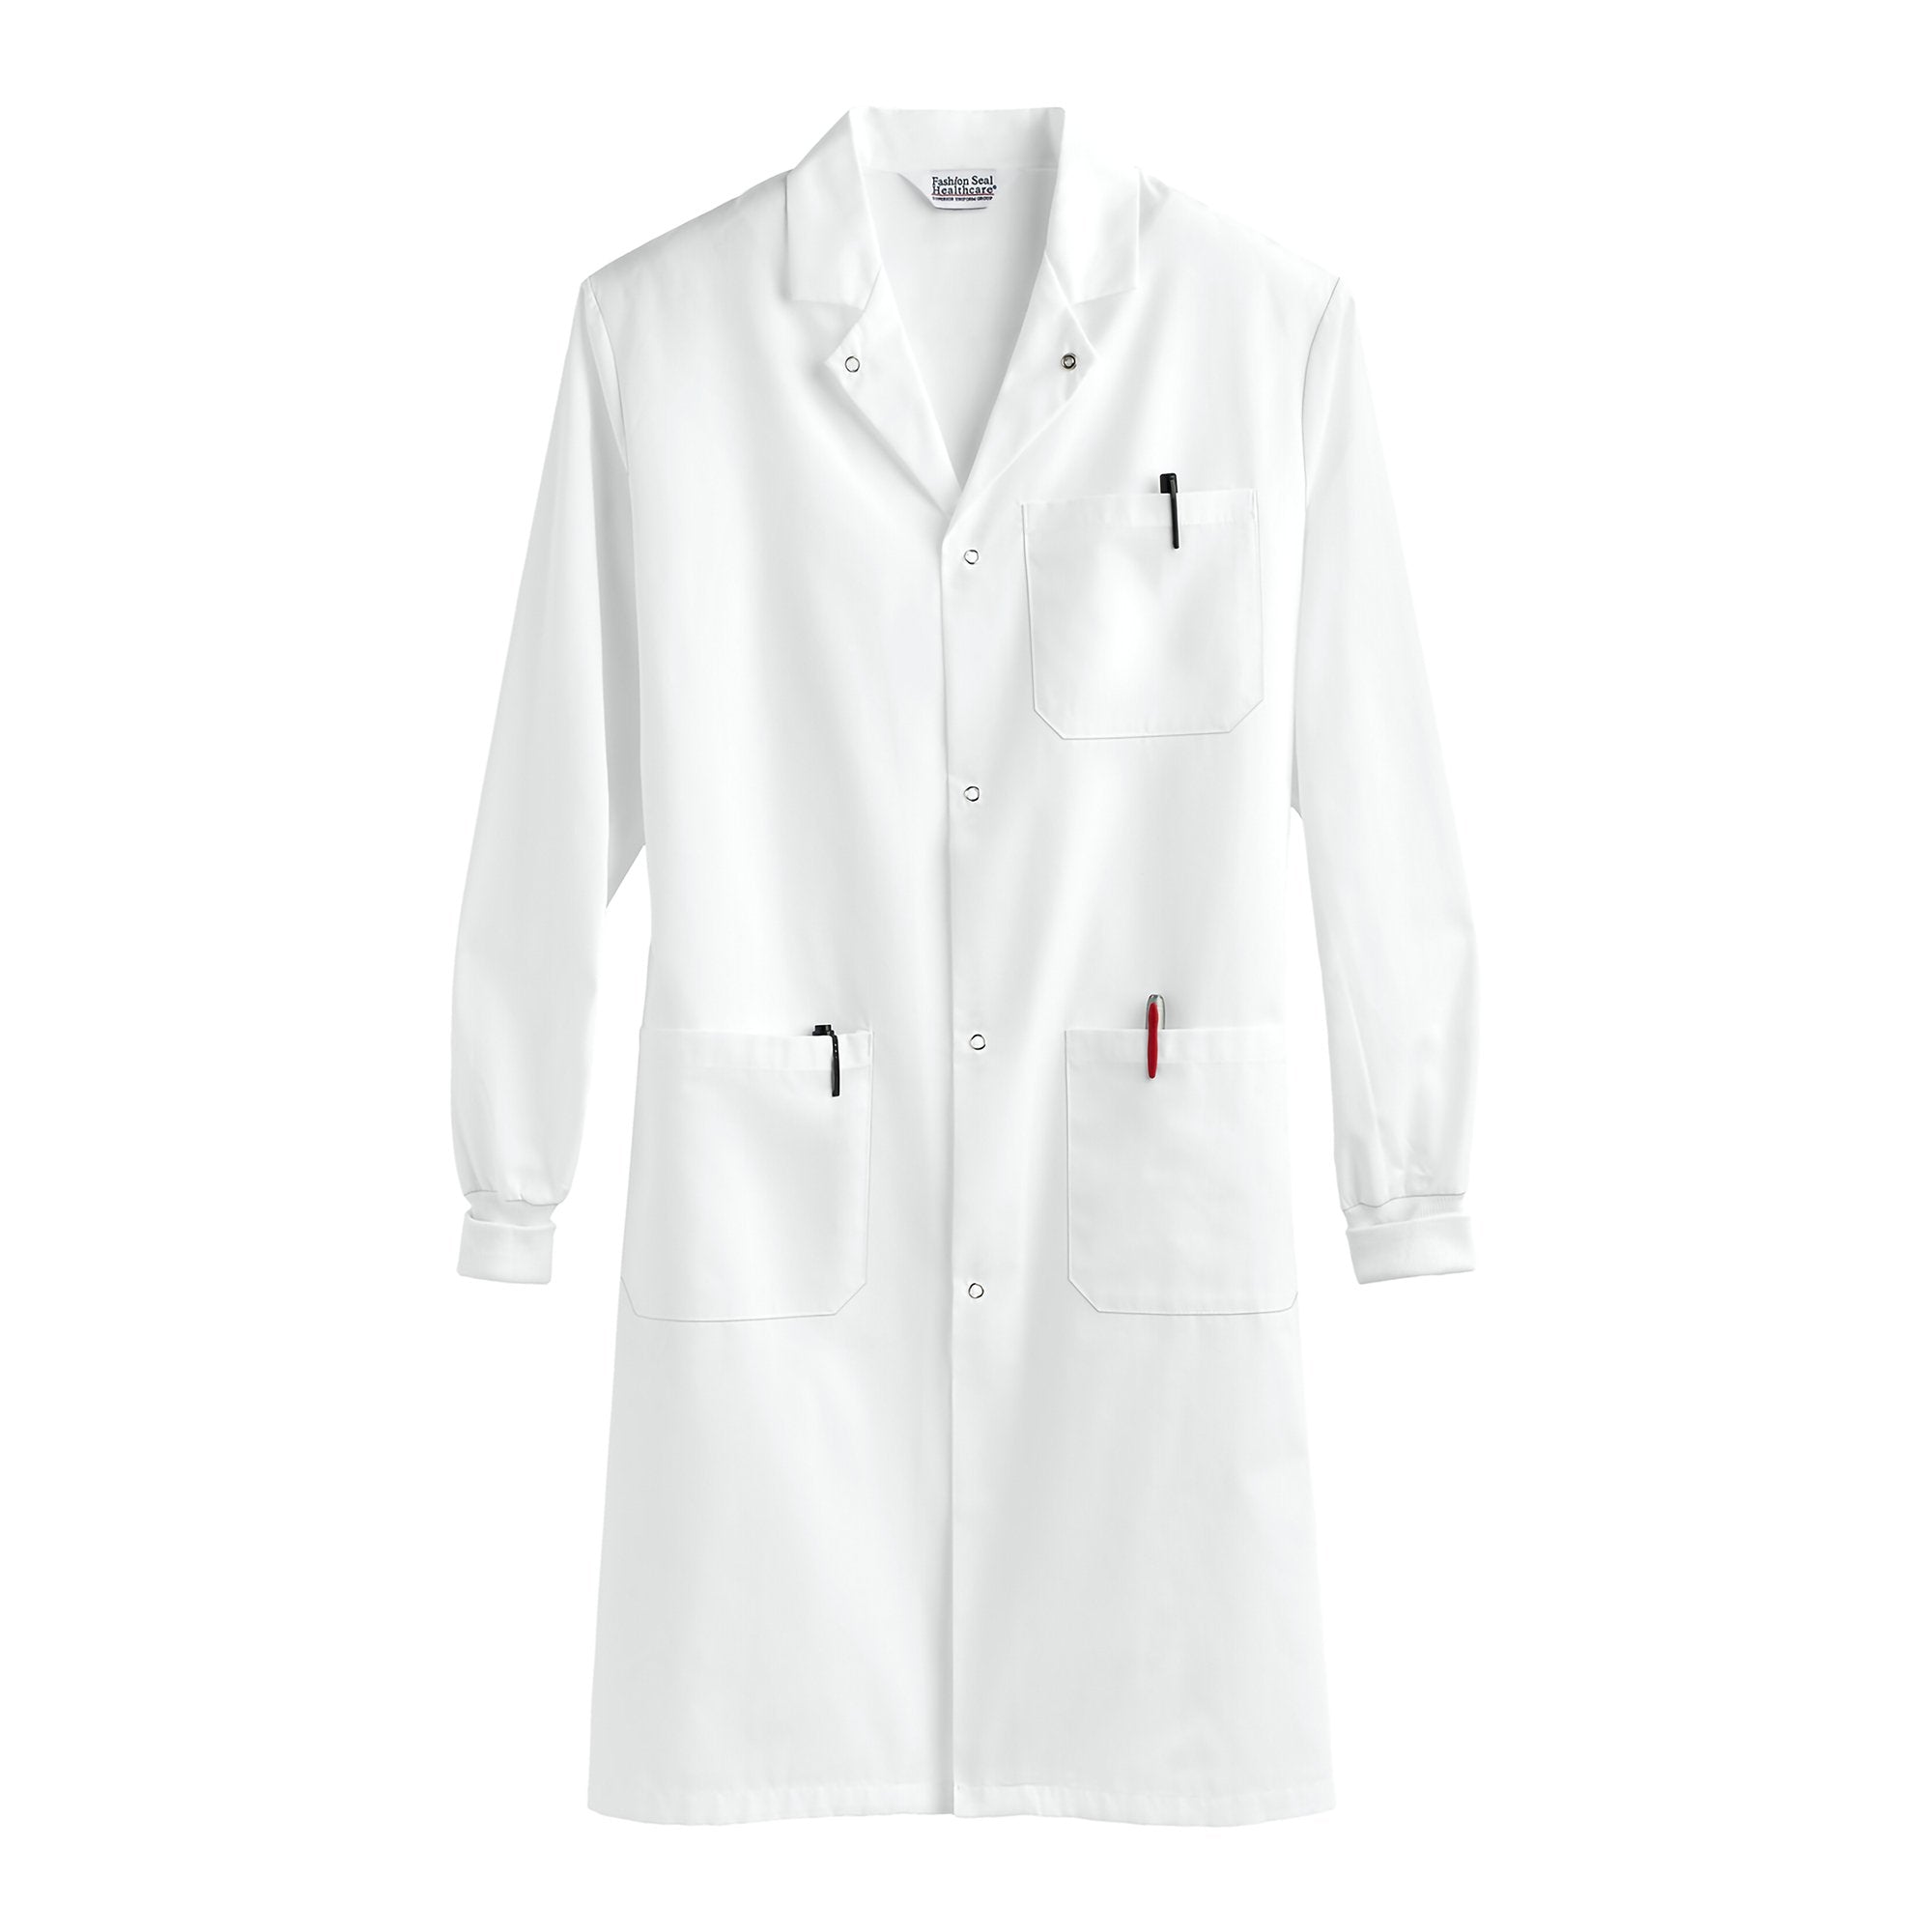 Lab Coat White Medium Knee Length 80% Polyester / 20% Cotton Reusable